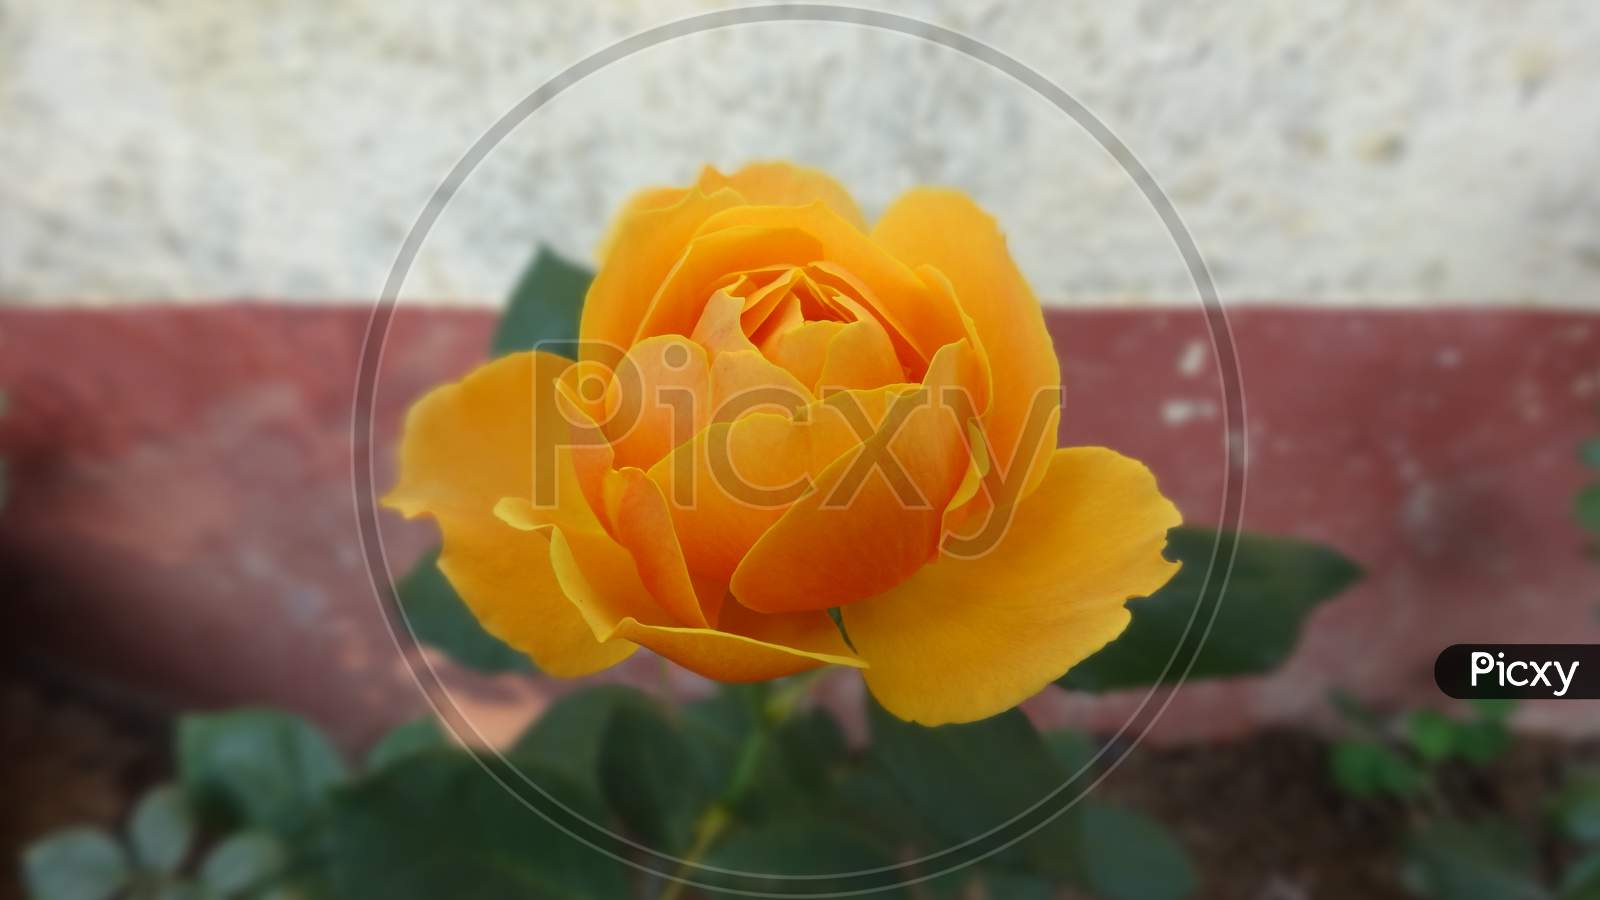 Garden rose Beautifull light orange flower.close up selective focus and blur background